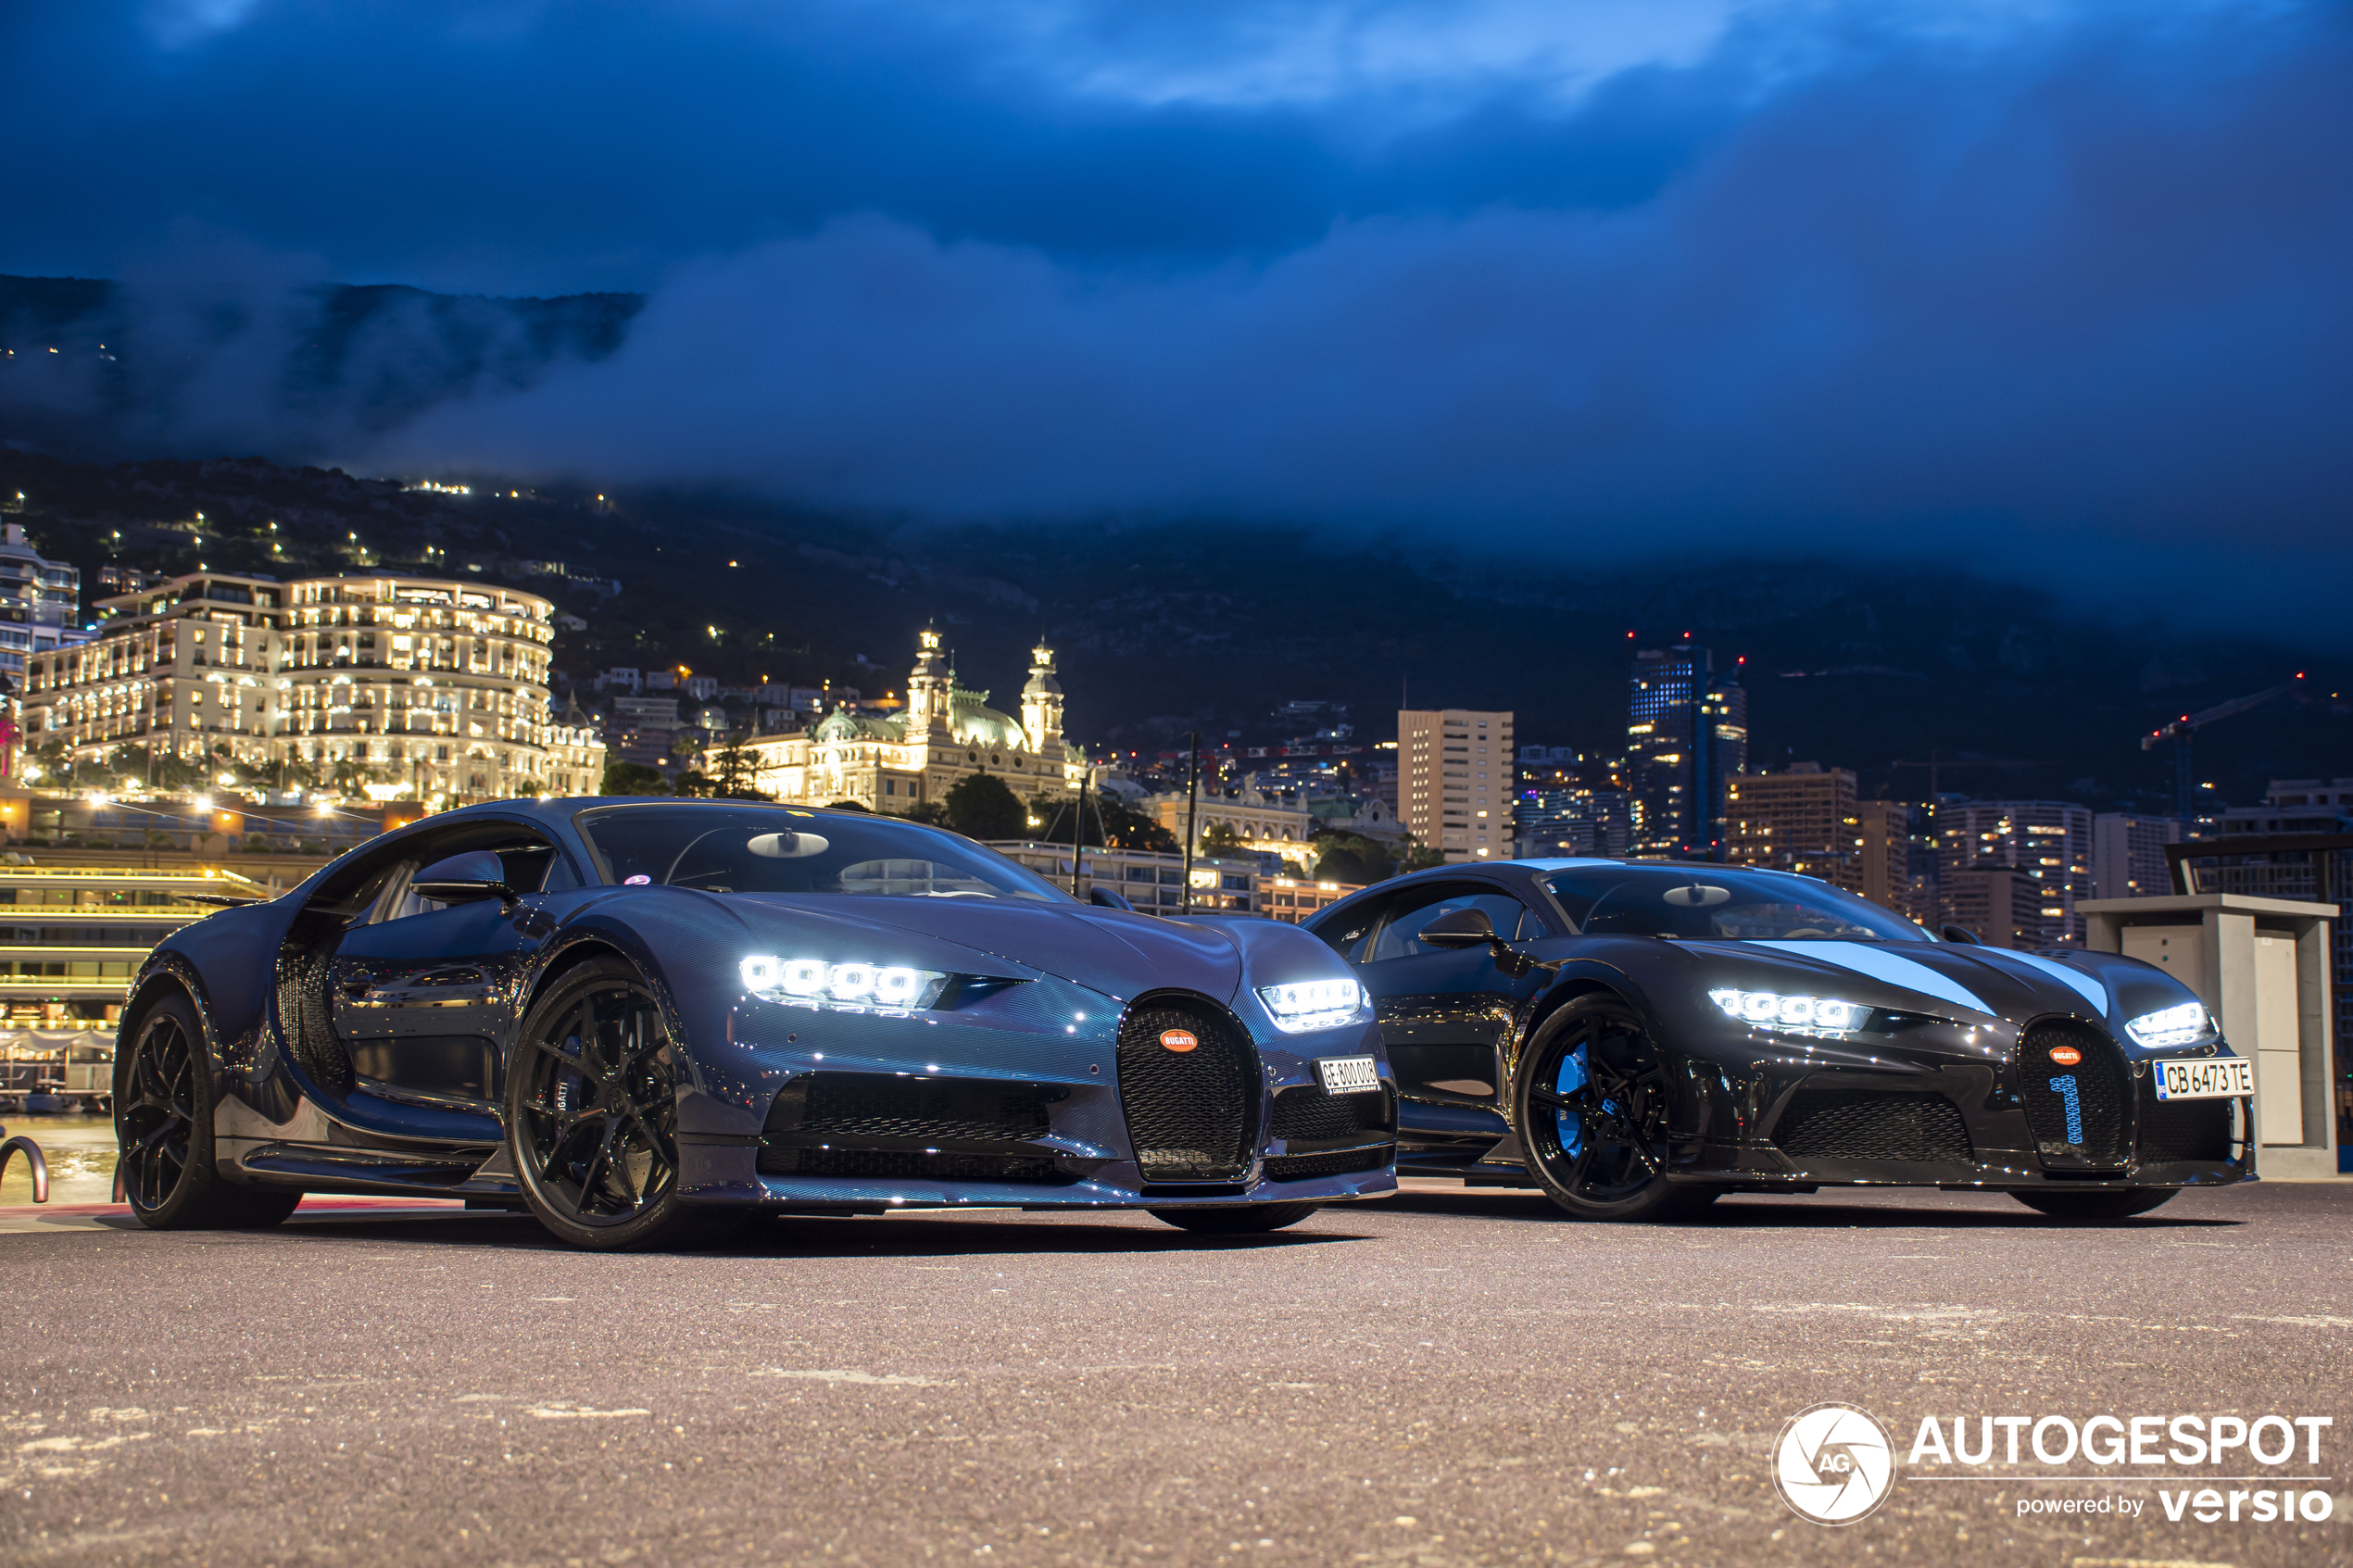 Two Bugattis drive through Monaco together